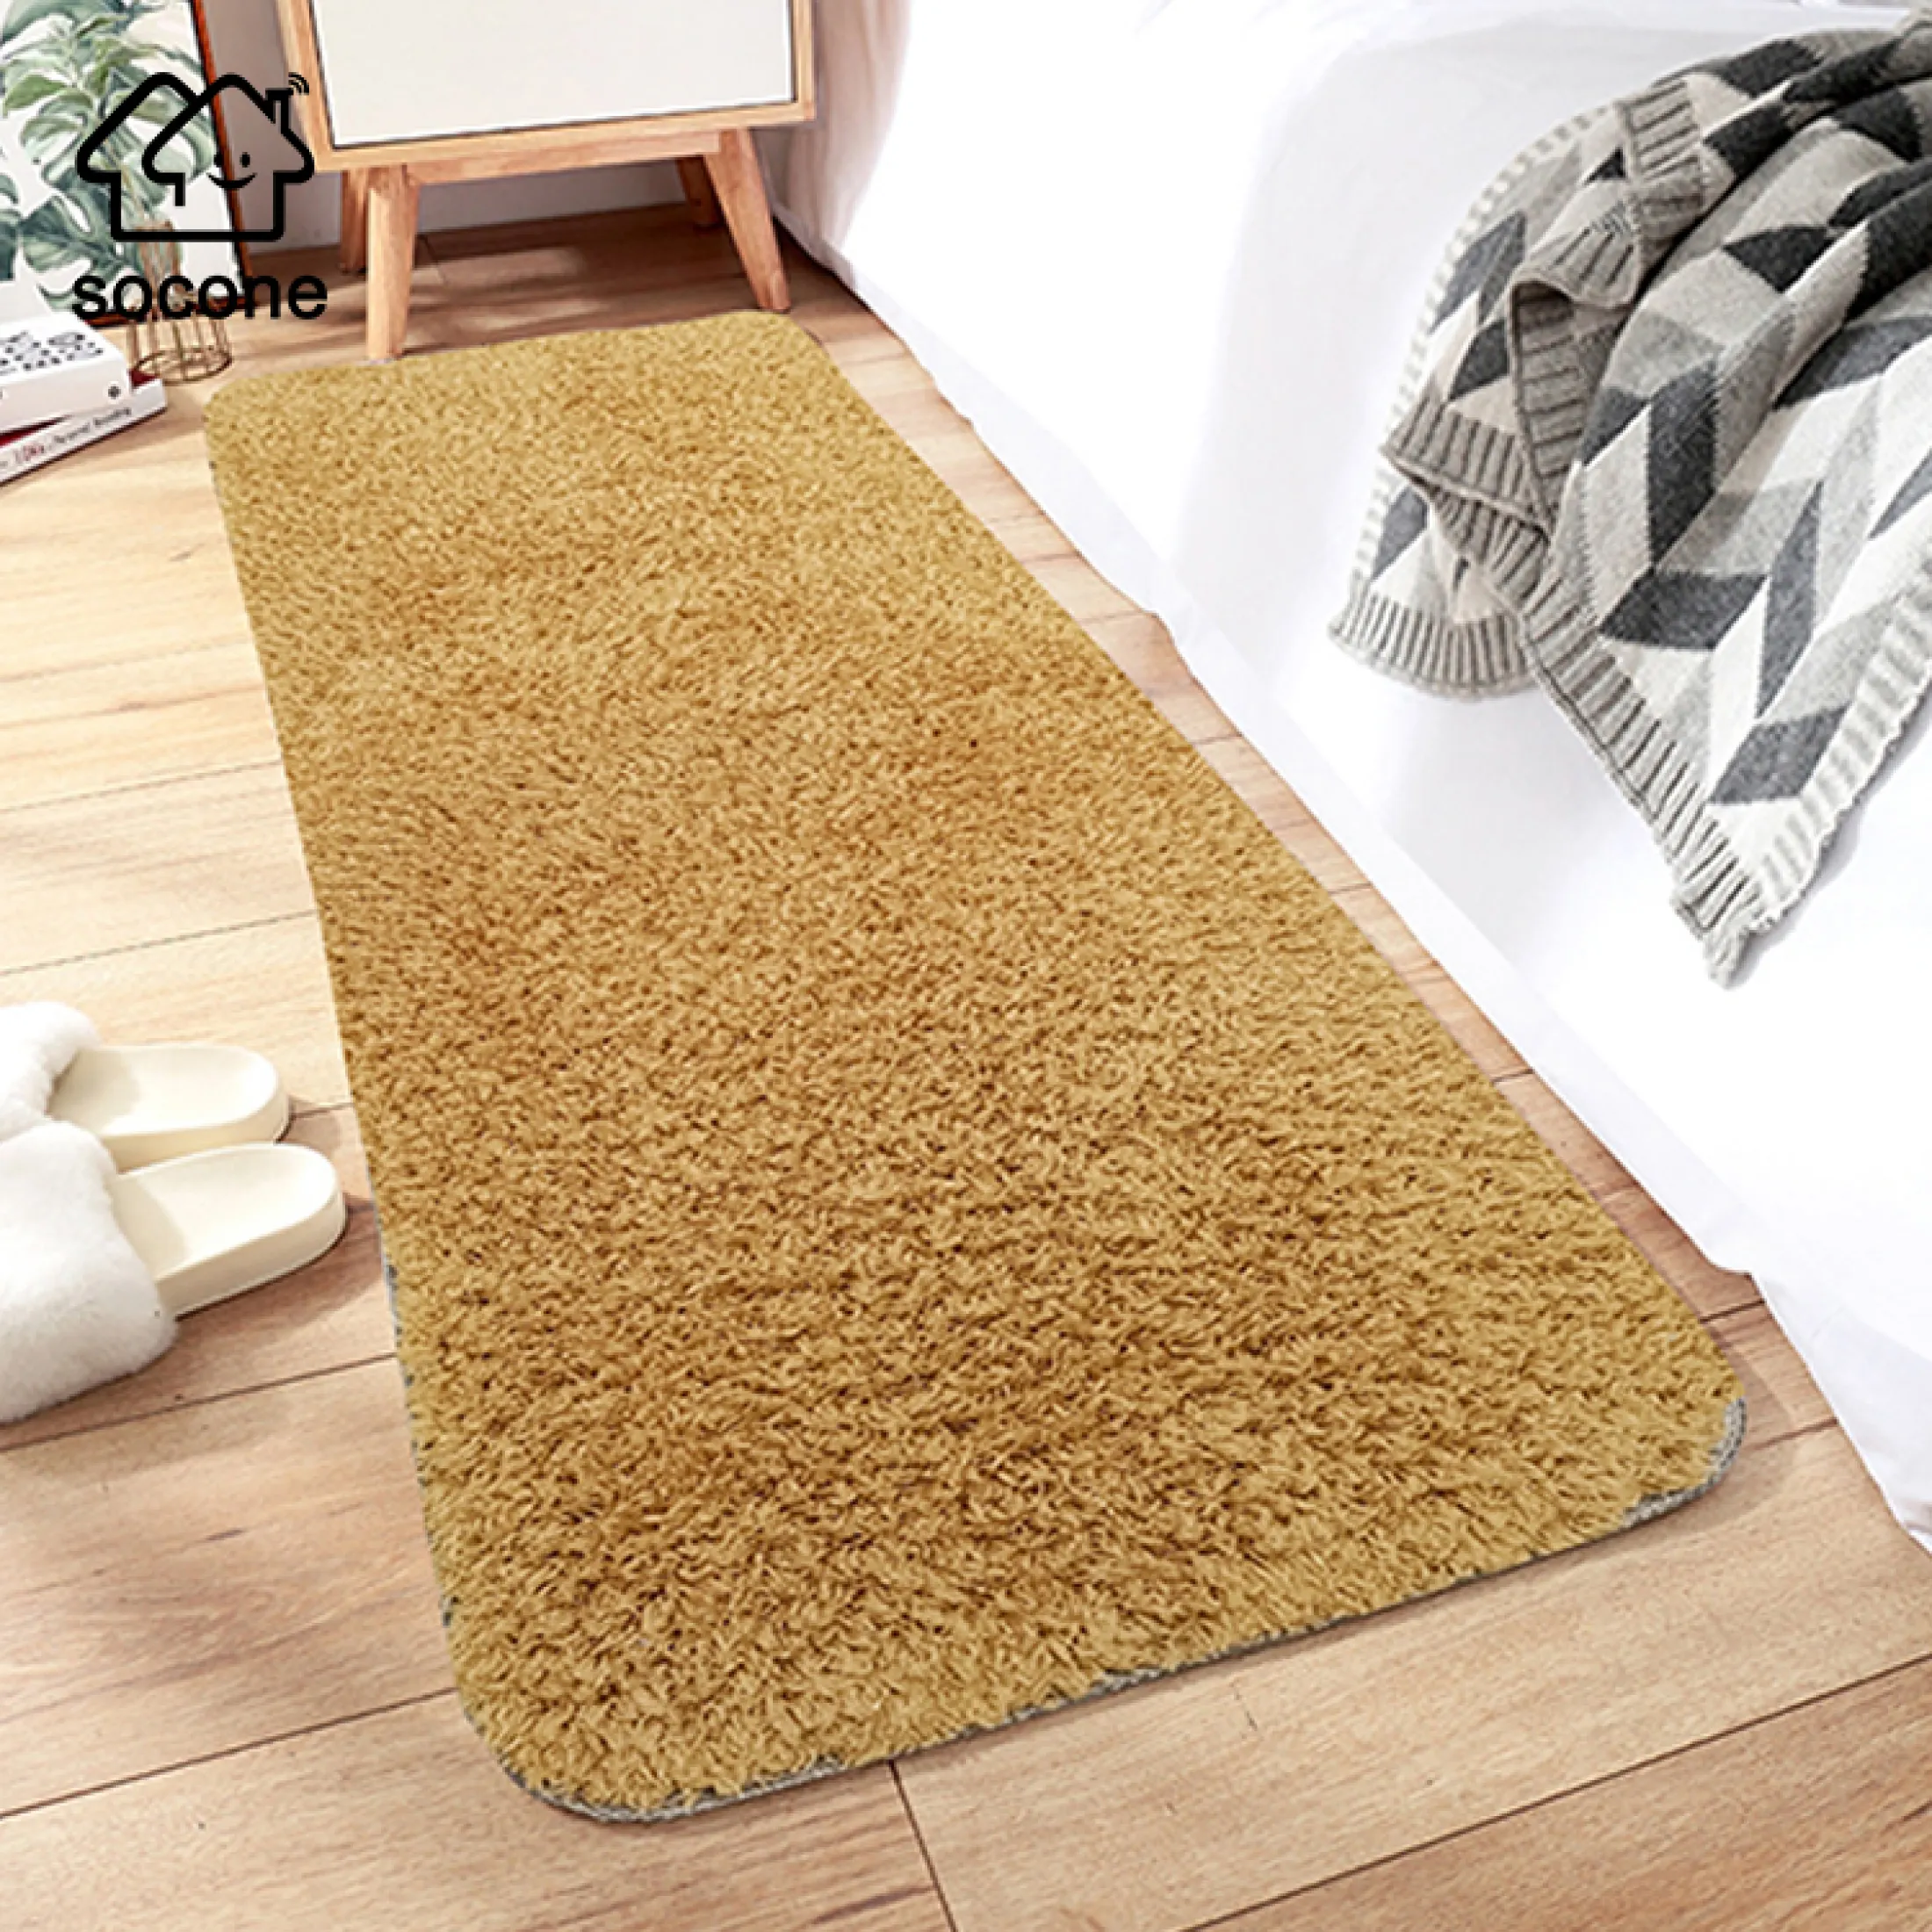 Fluffy Rugs Pad Anti Slip Doormat Home Carpet Bedroom Living Room Floor Mat